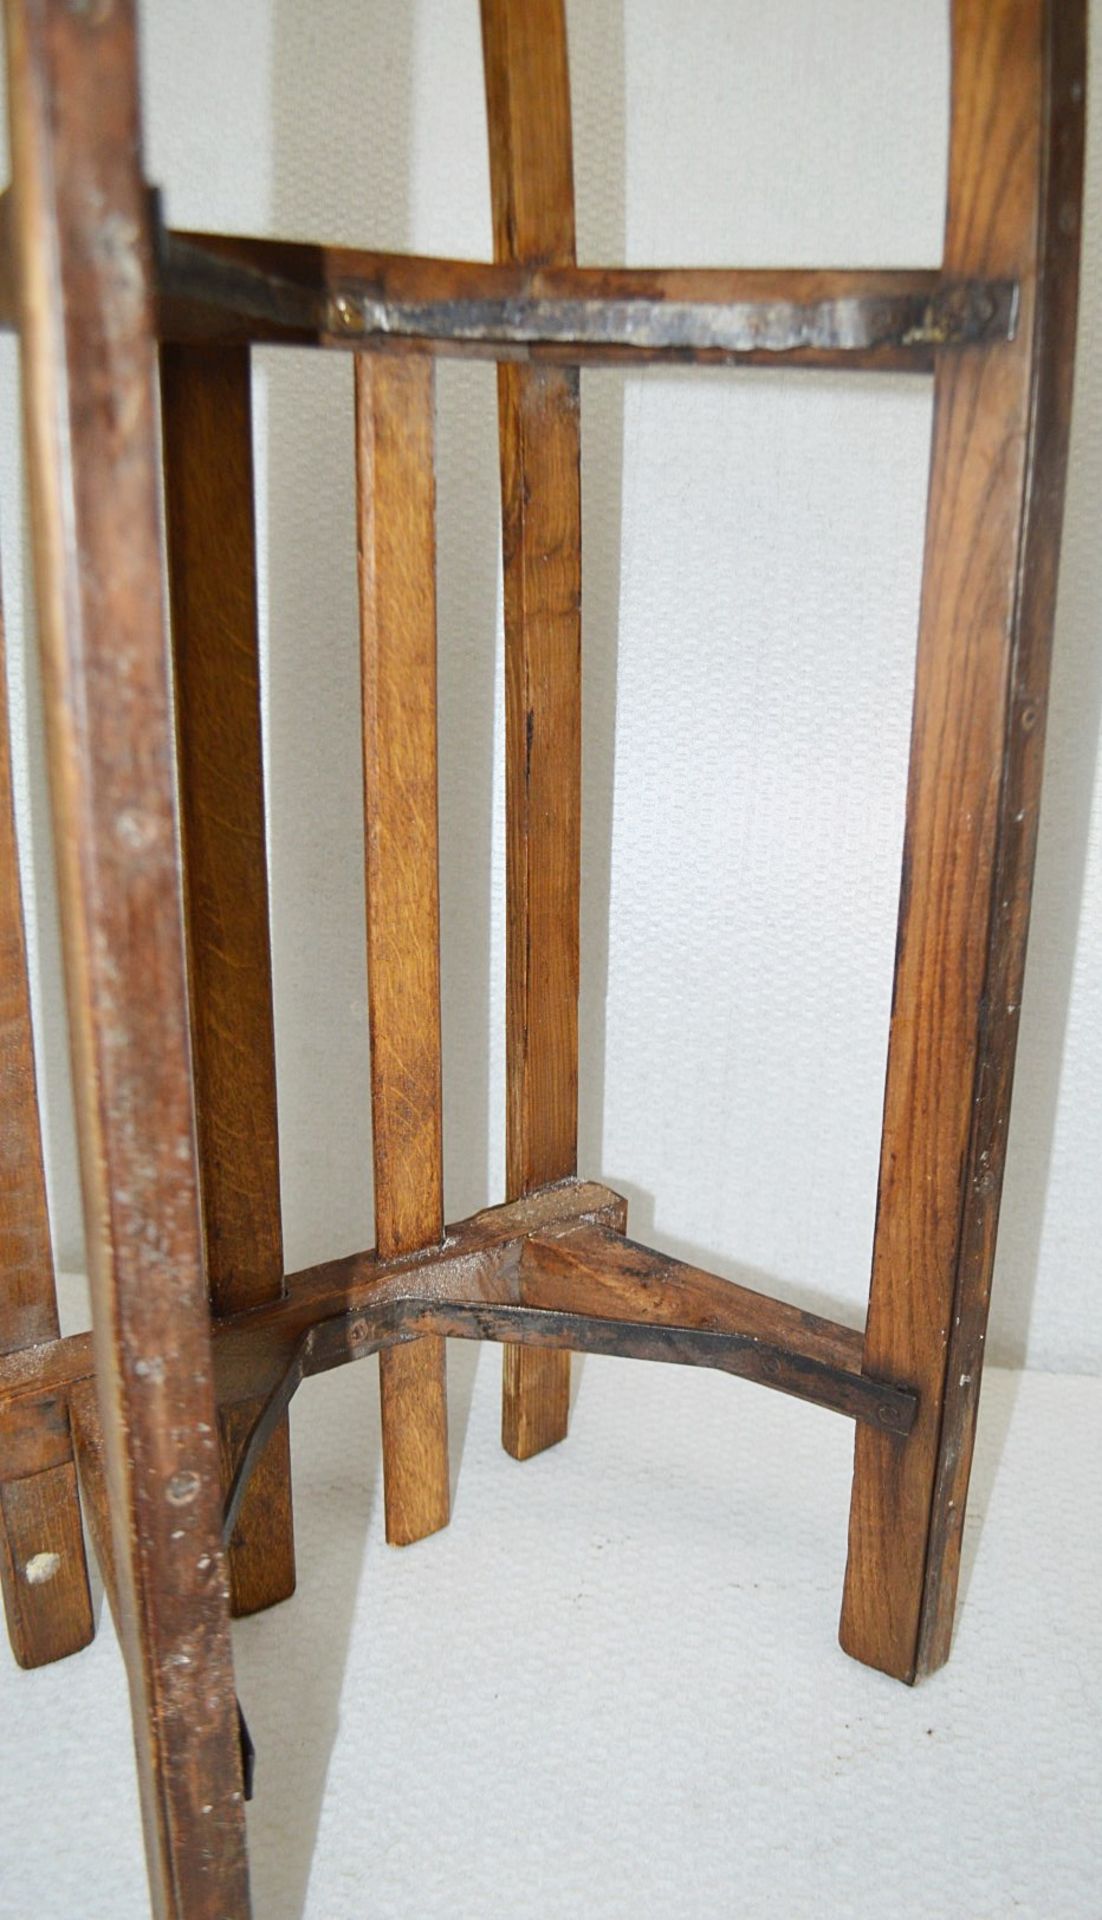 1 x Vintage Wooden Sledge - Ex-Display Piece - Dimensions: H26 x W100 x D36cm - Ref: HAR210 GIT - - Image 4 of 5